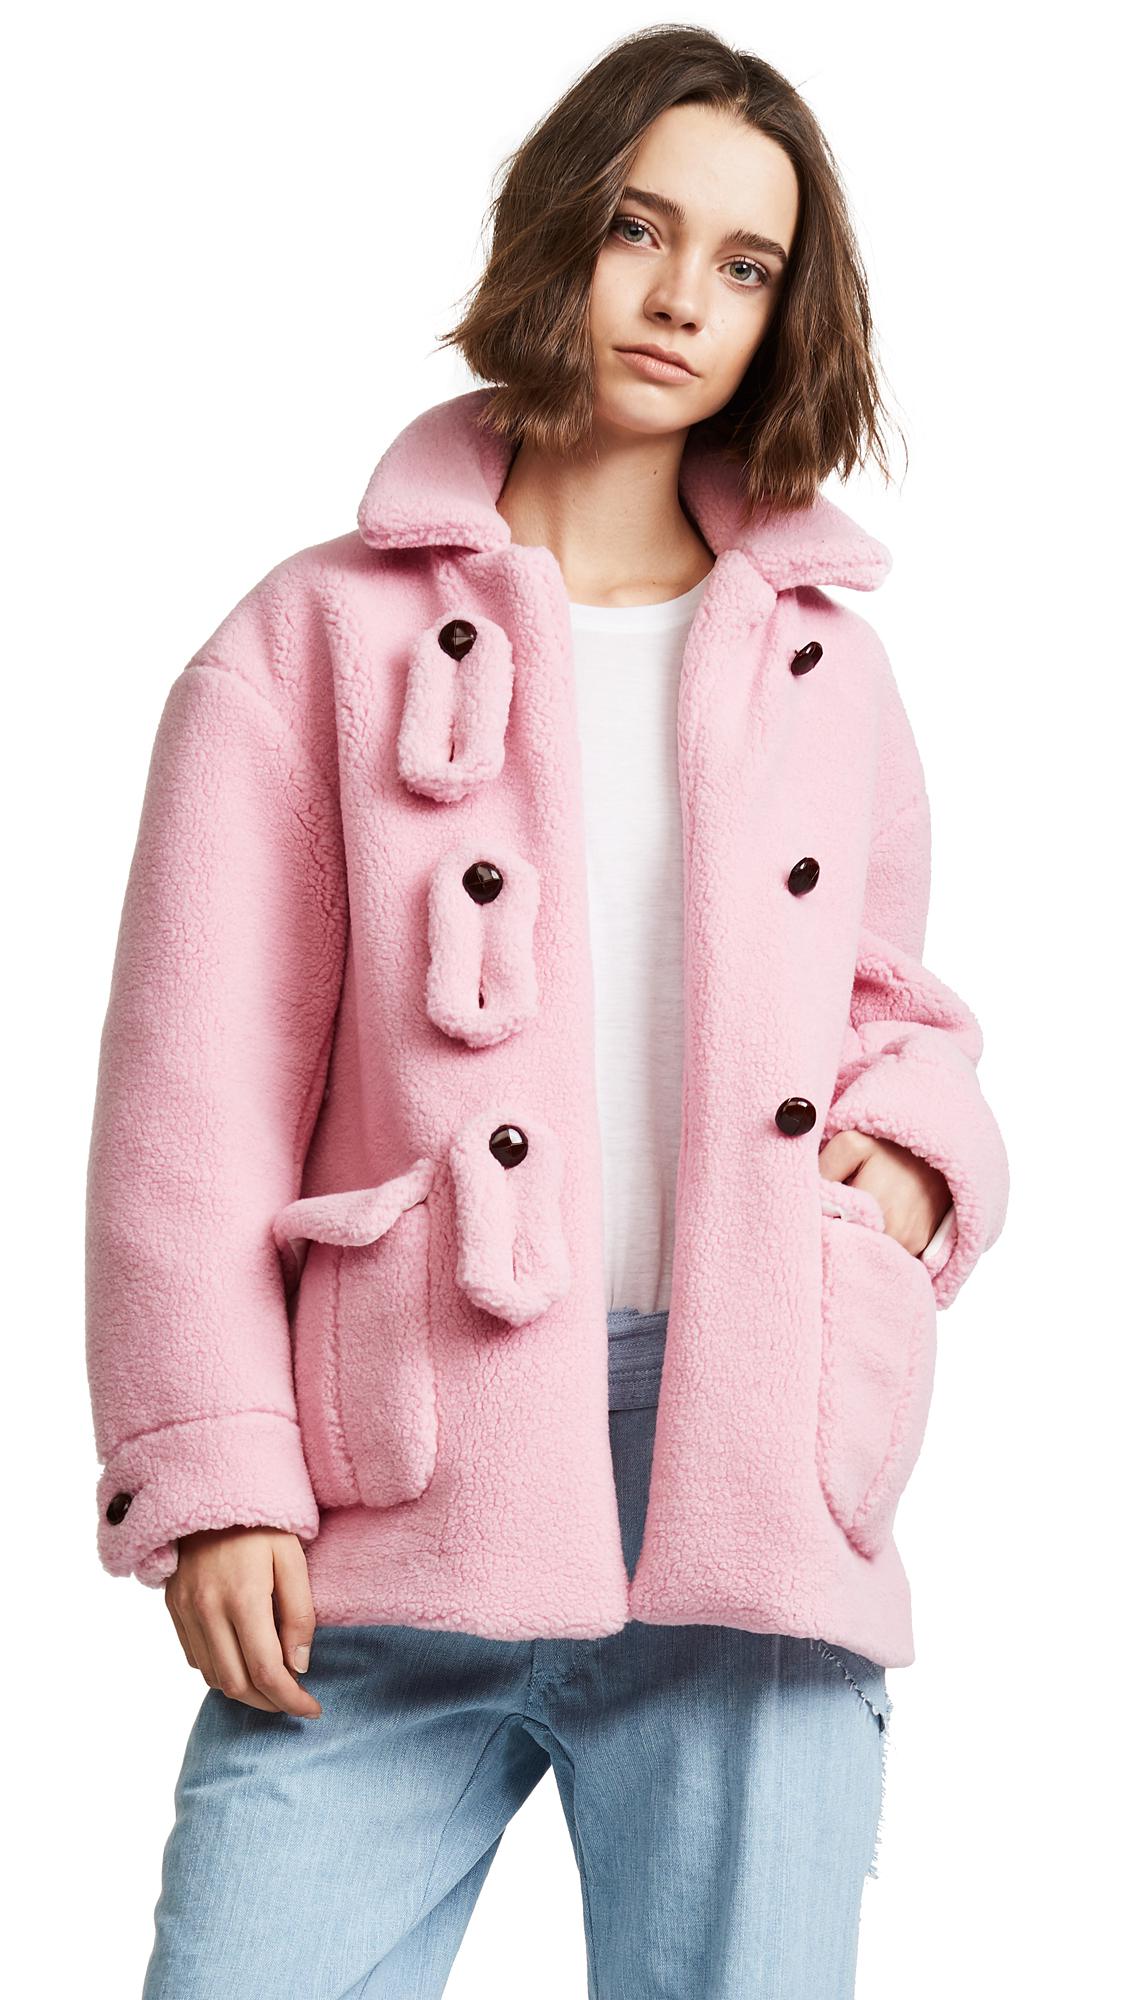 Lyst - Olympia Le-Tan Alicia Teddy Bear Coat in Pink